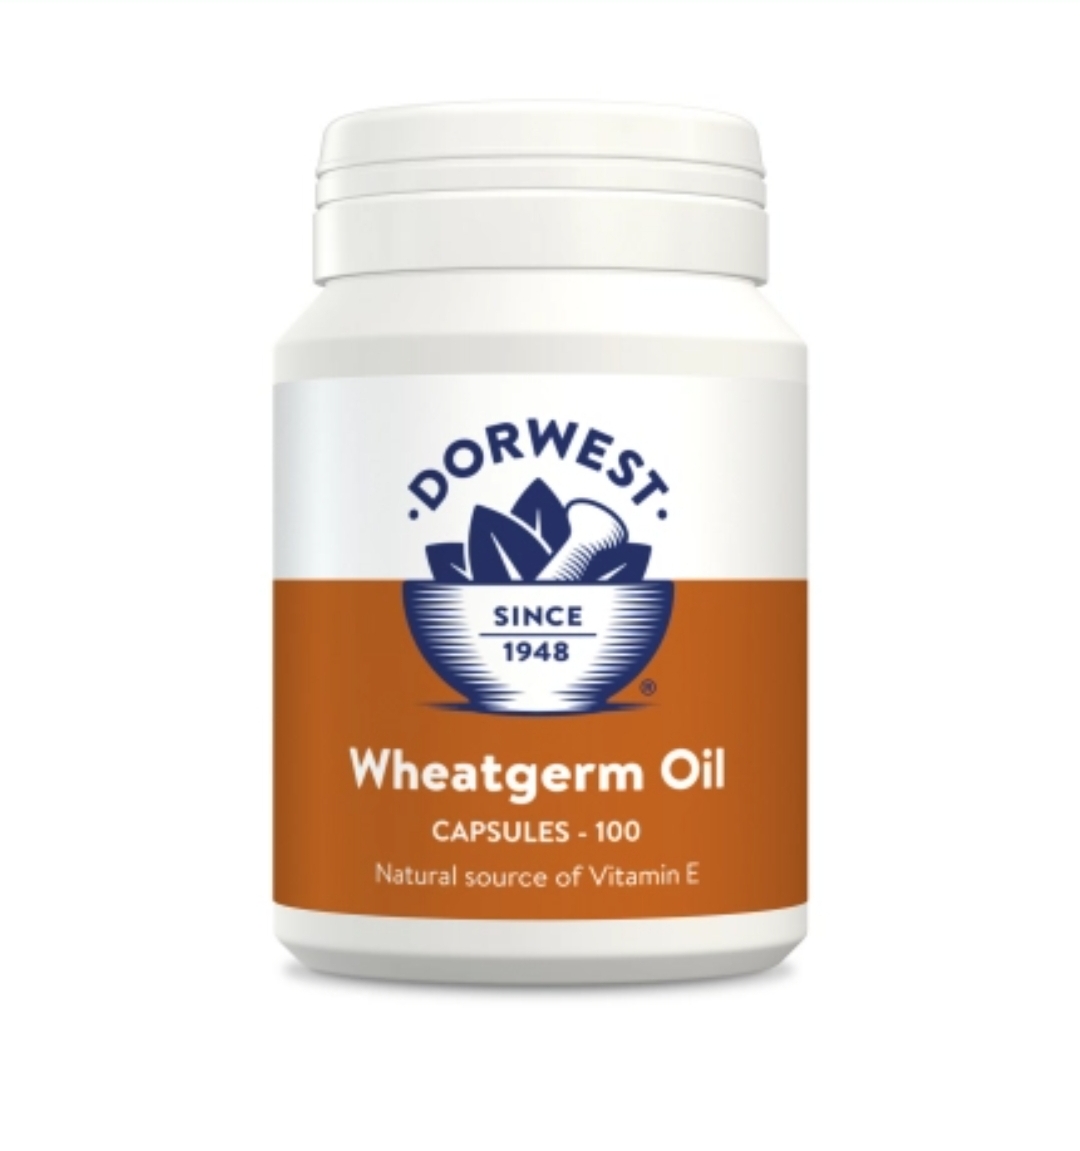 wheatgerm oil capsules